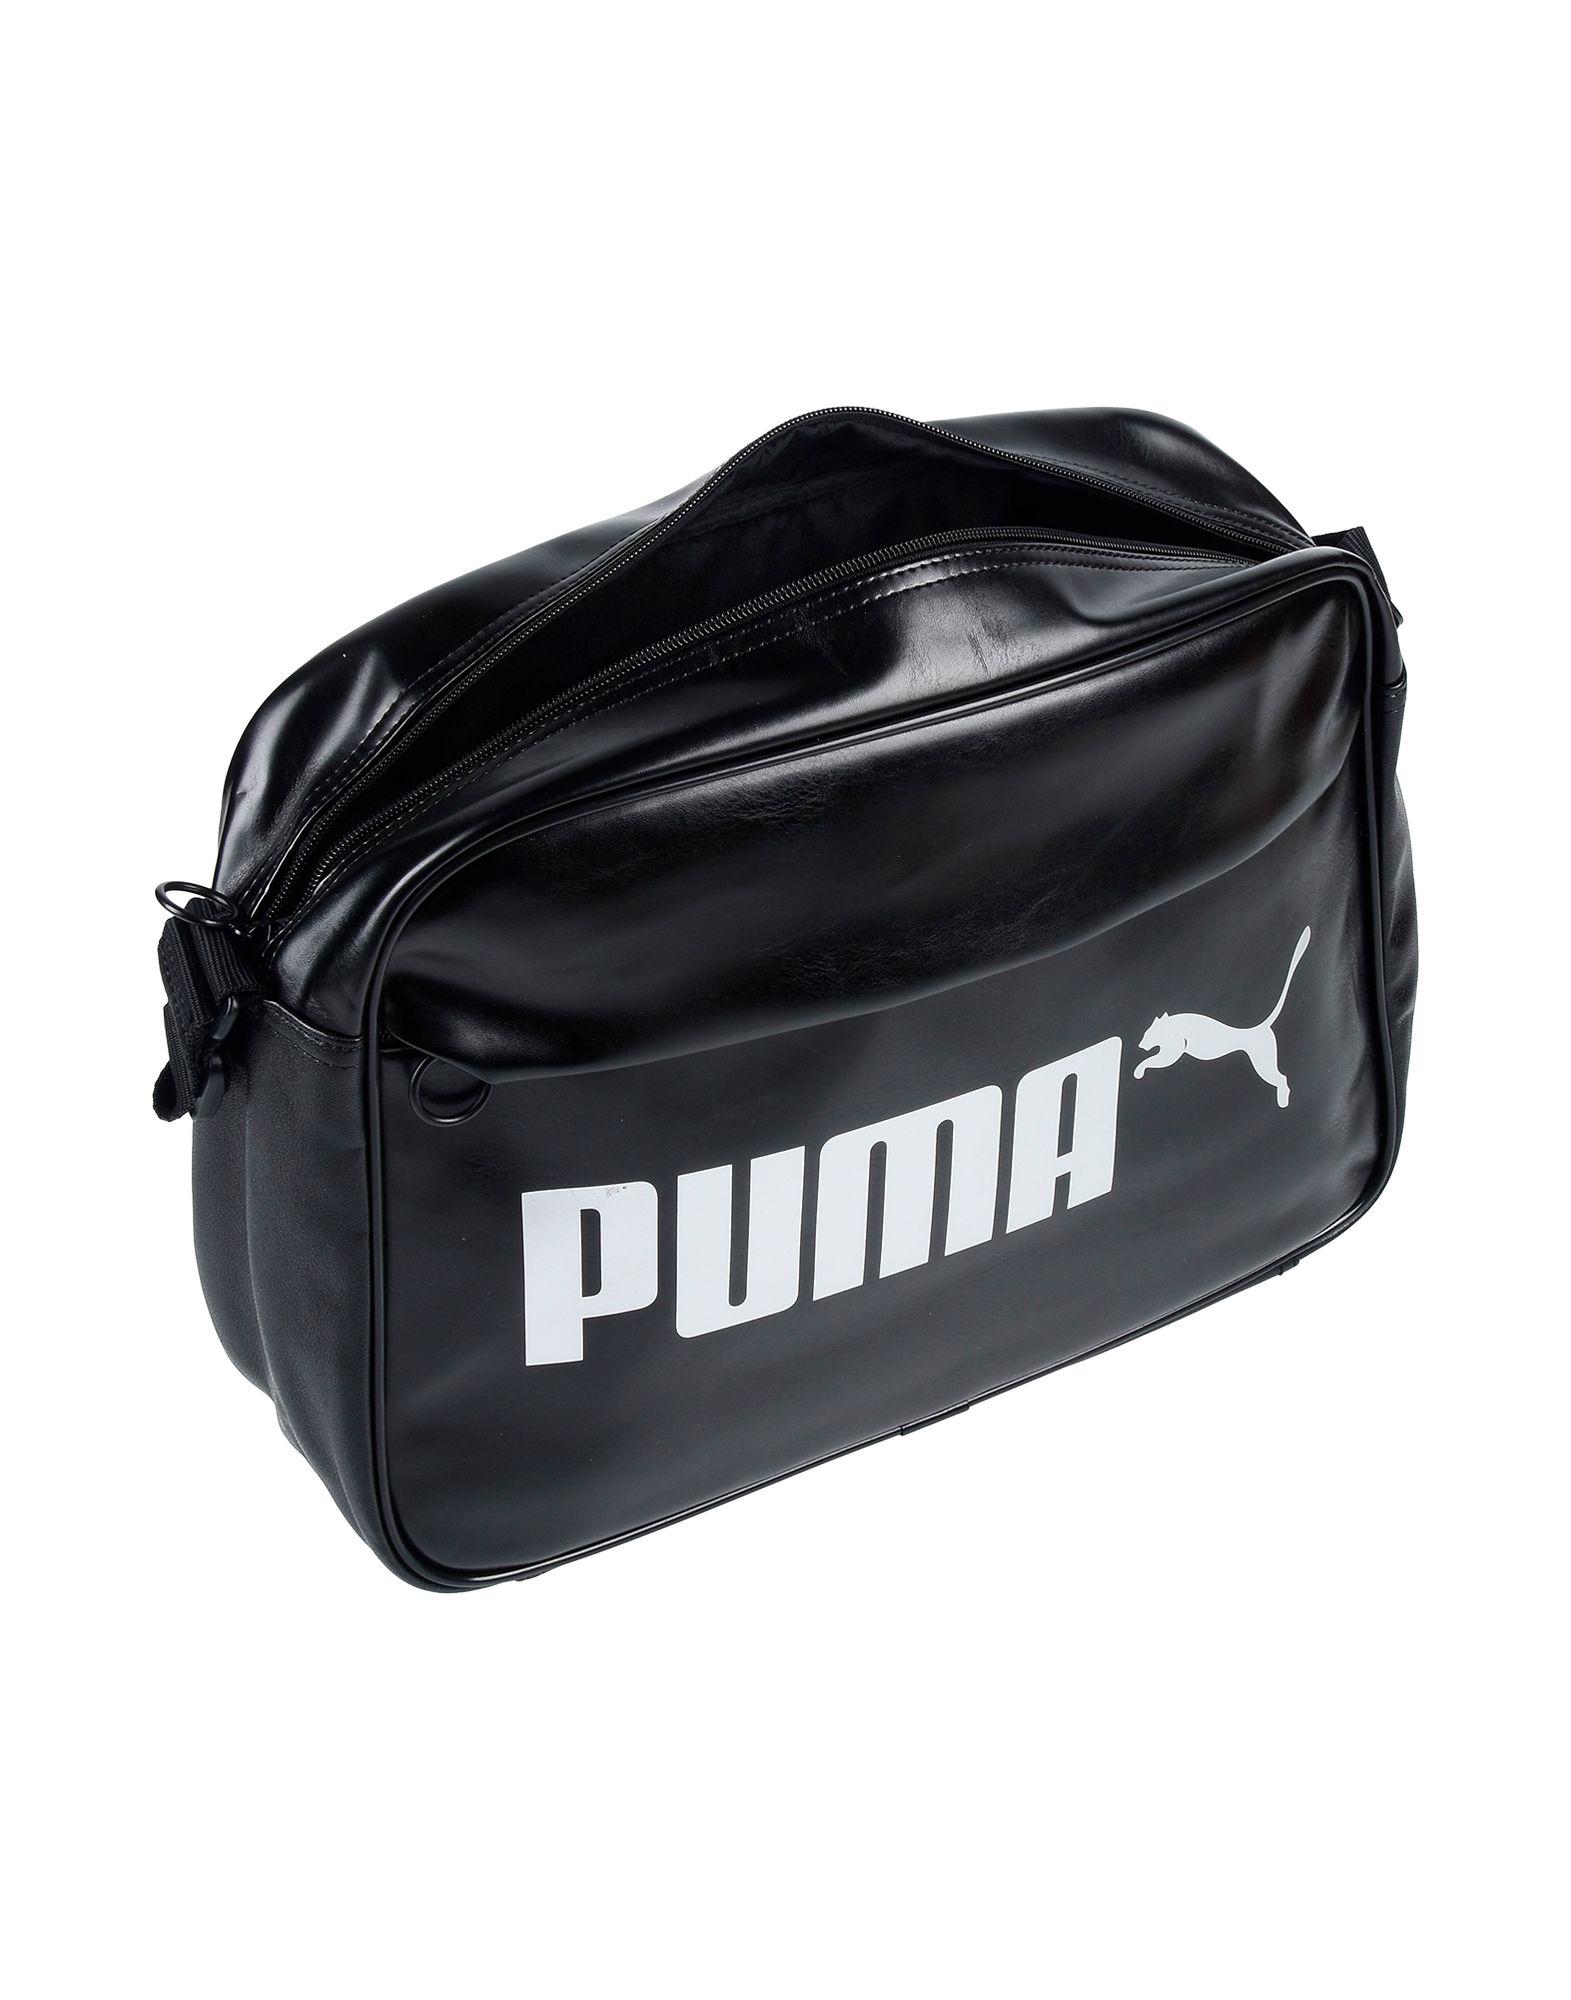 PUMA Work Bags in Black - Lyst